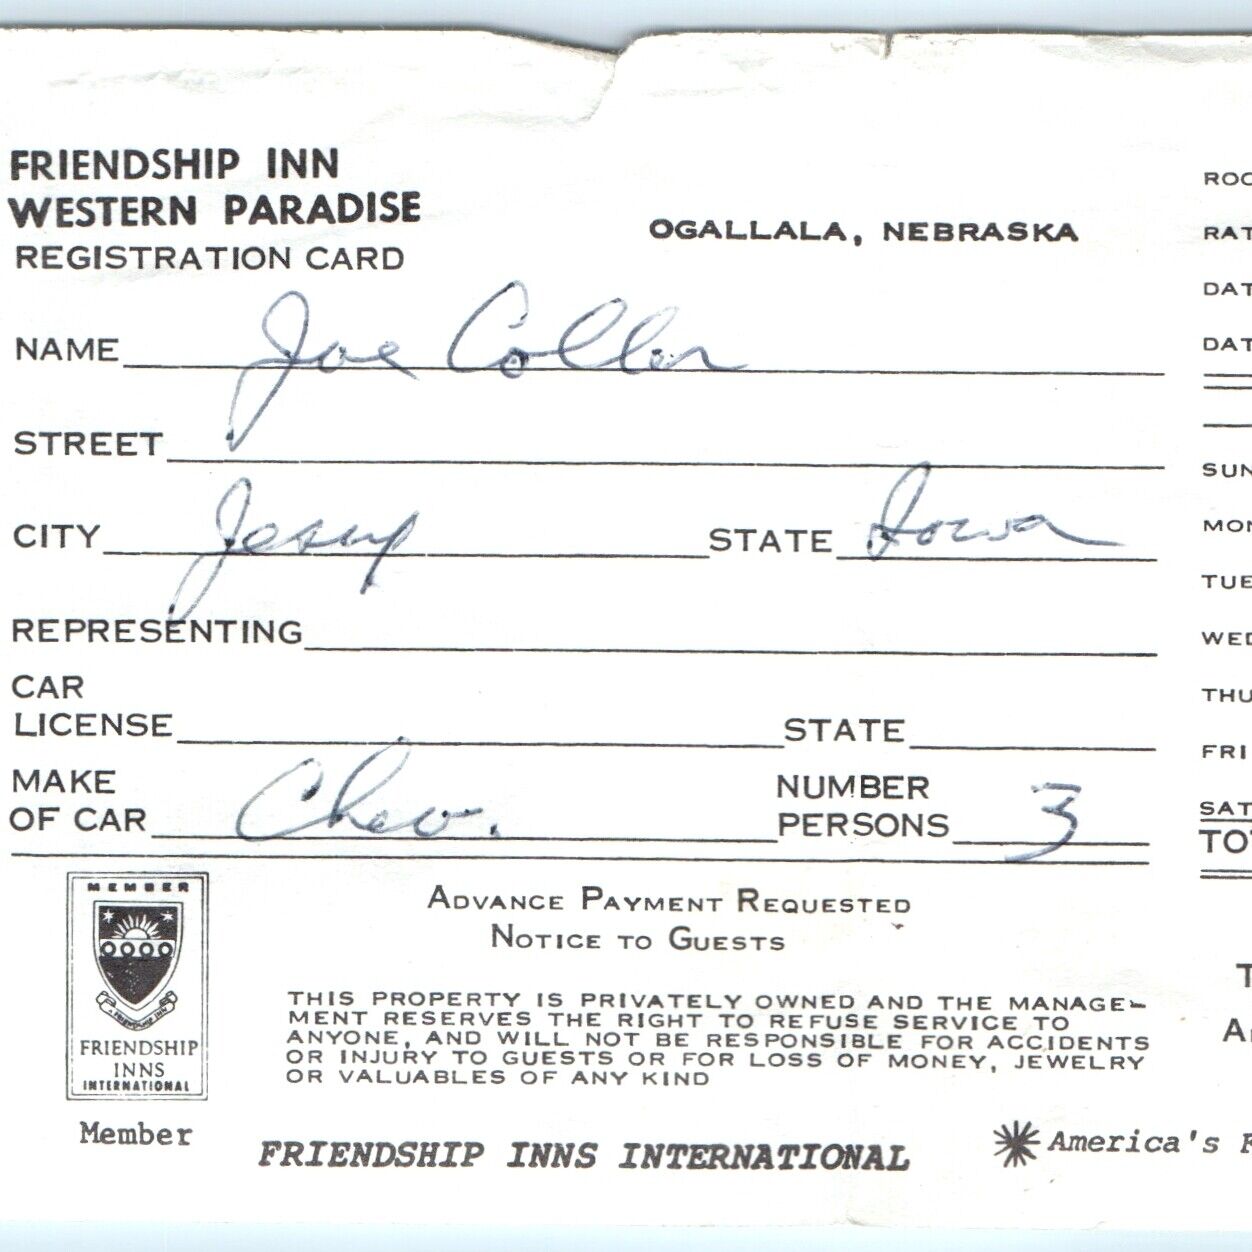 1975 Ogallala, Ne Hotel Registration Card Friendship Inn Western Paradise Vtg 2B